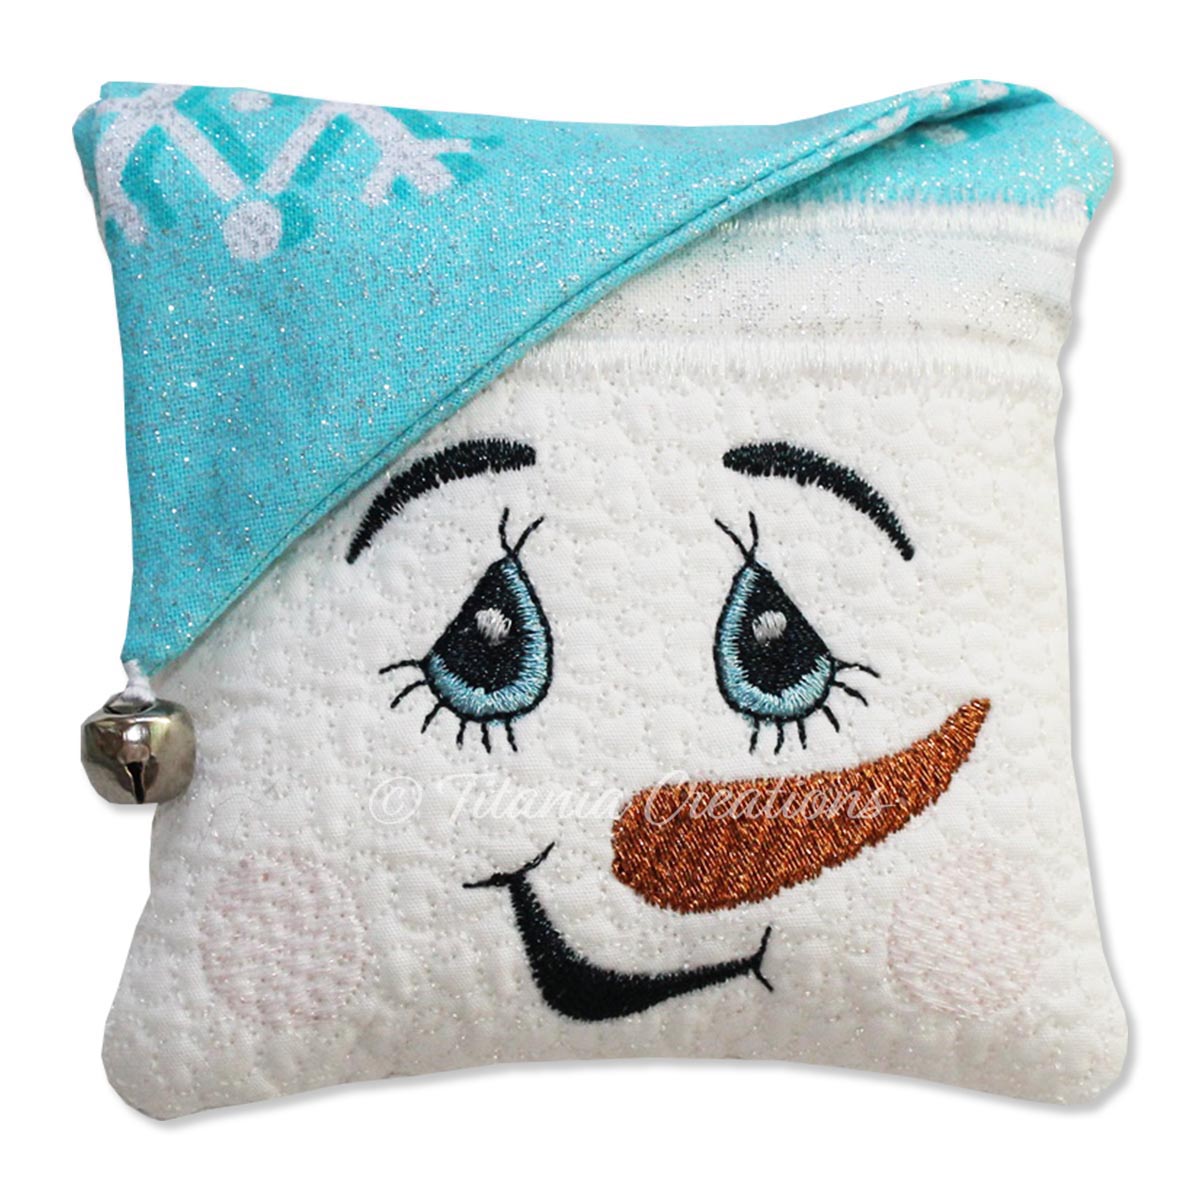 ITH Snowman Pillow 4x4 5x5 6x6 7x7 8x8